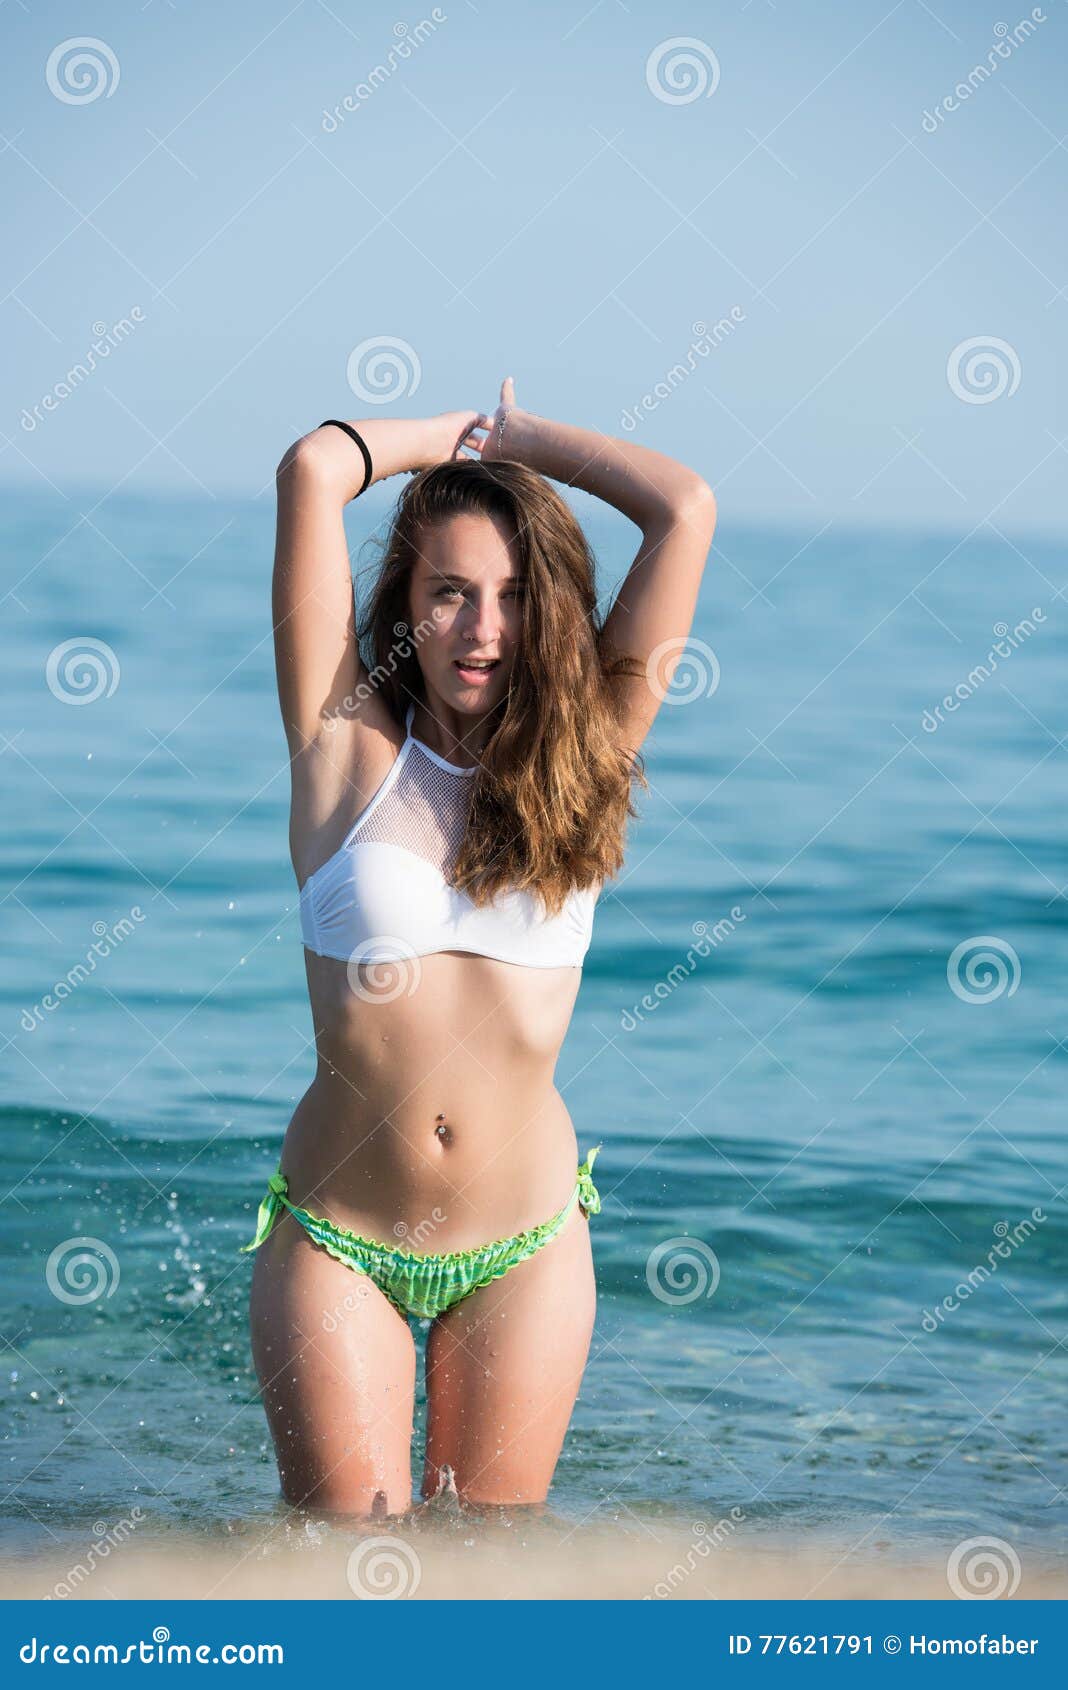 pretty girl wear bikini playing water kneeling sea vertical full body length photo 77621791